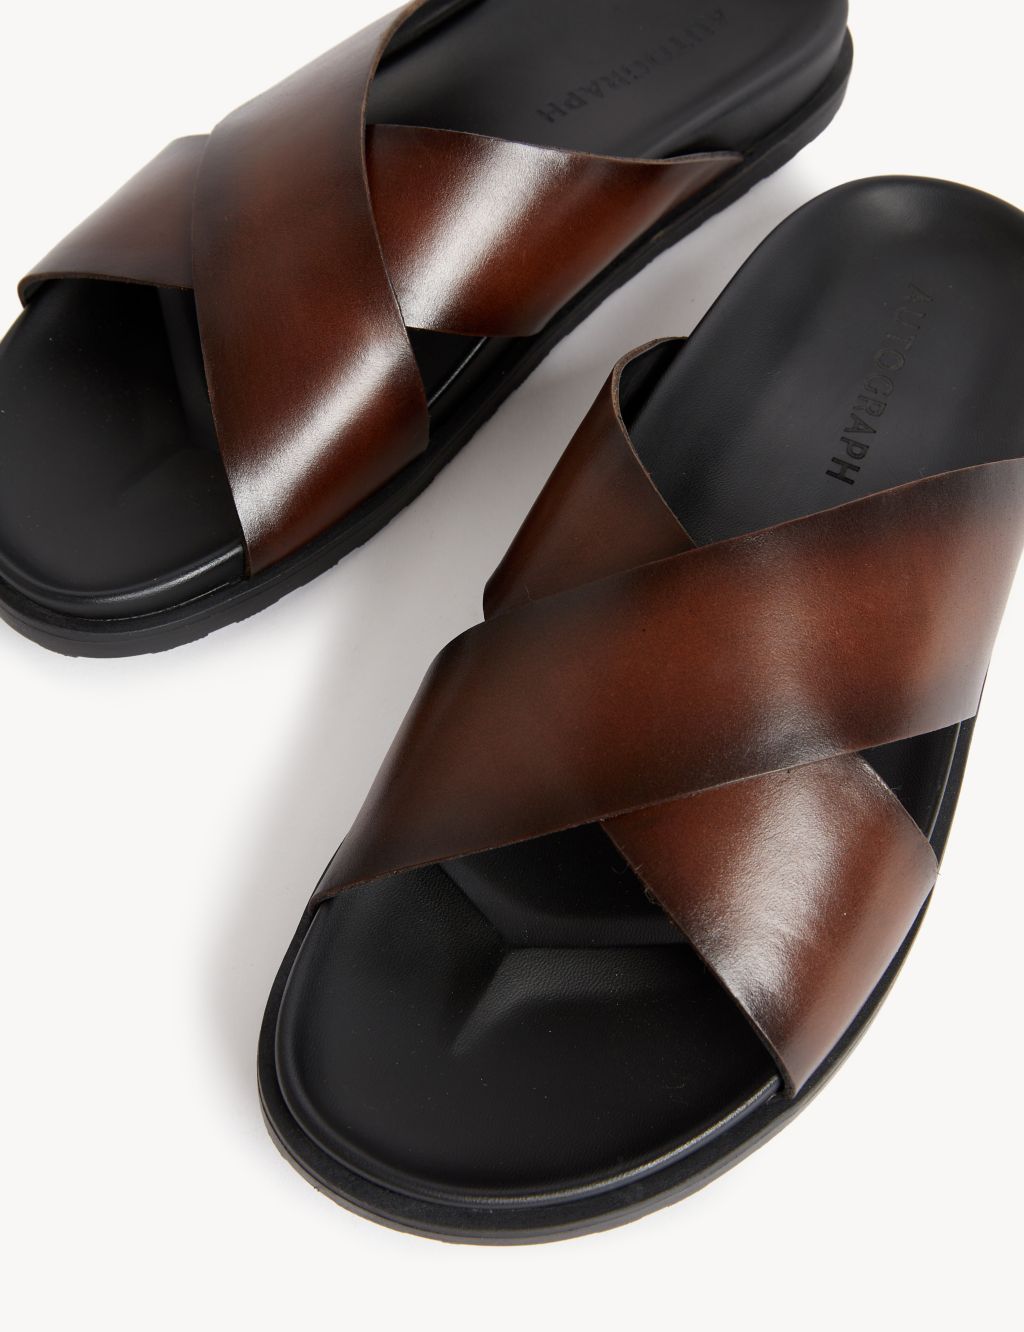 Leather Slip-On Sandals image 2